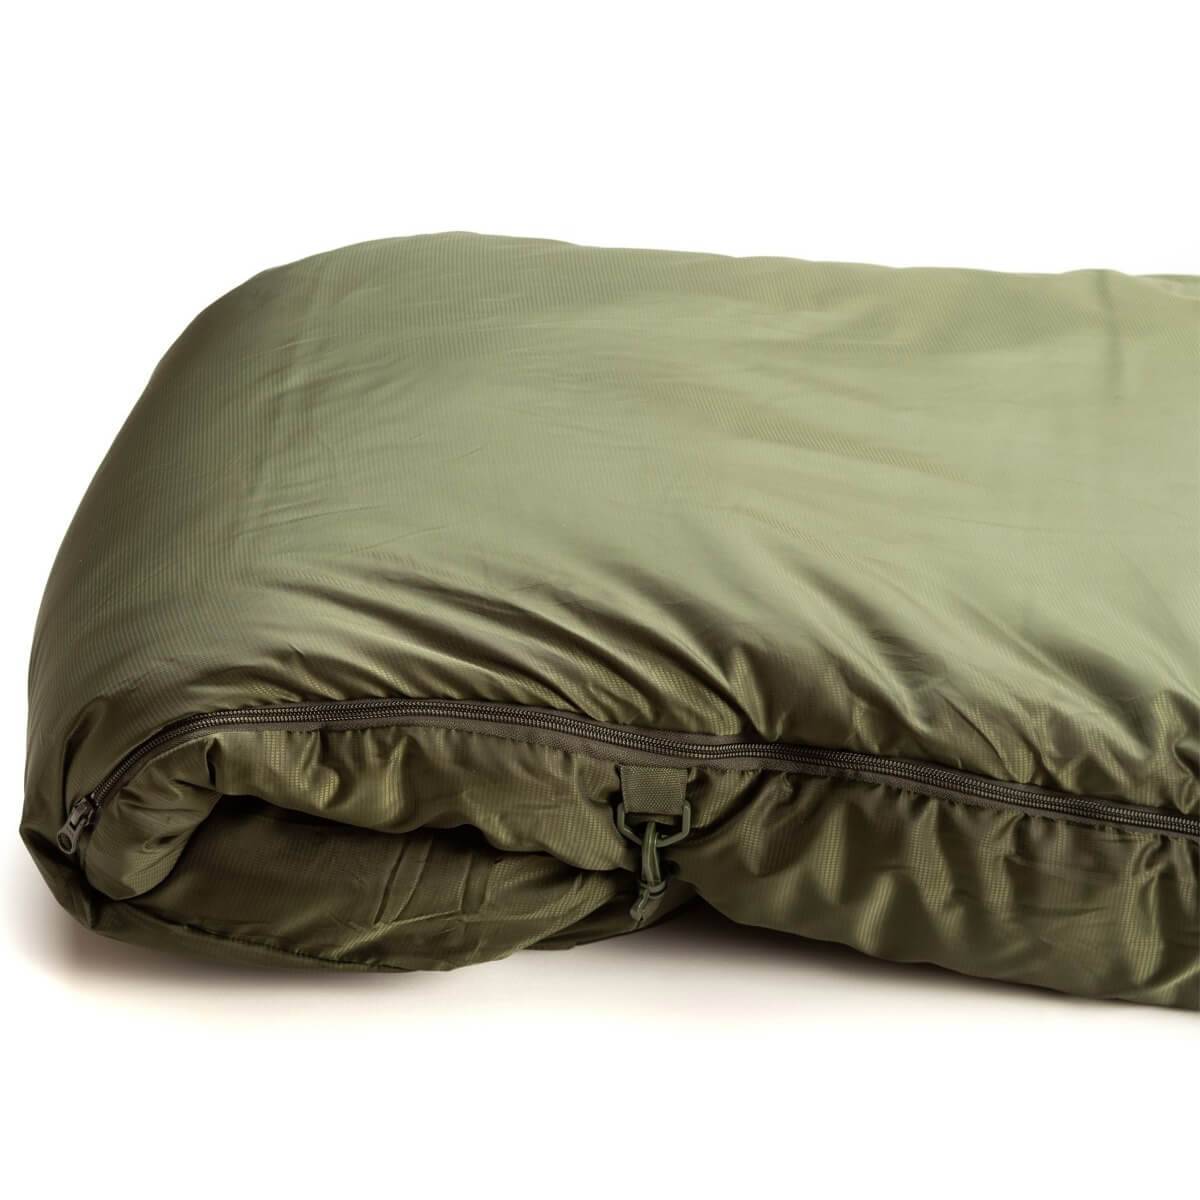 Snugpak Softie Elite 5 Sleeping Bag Olive Green - John Bull Clothing